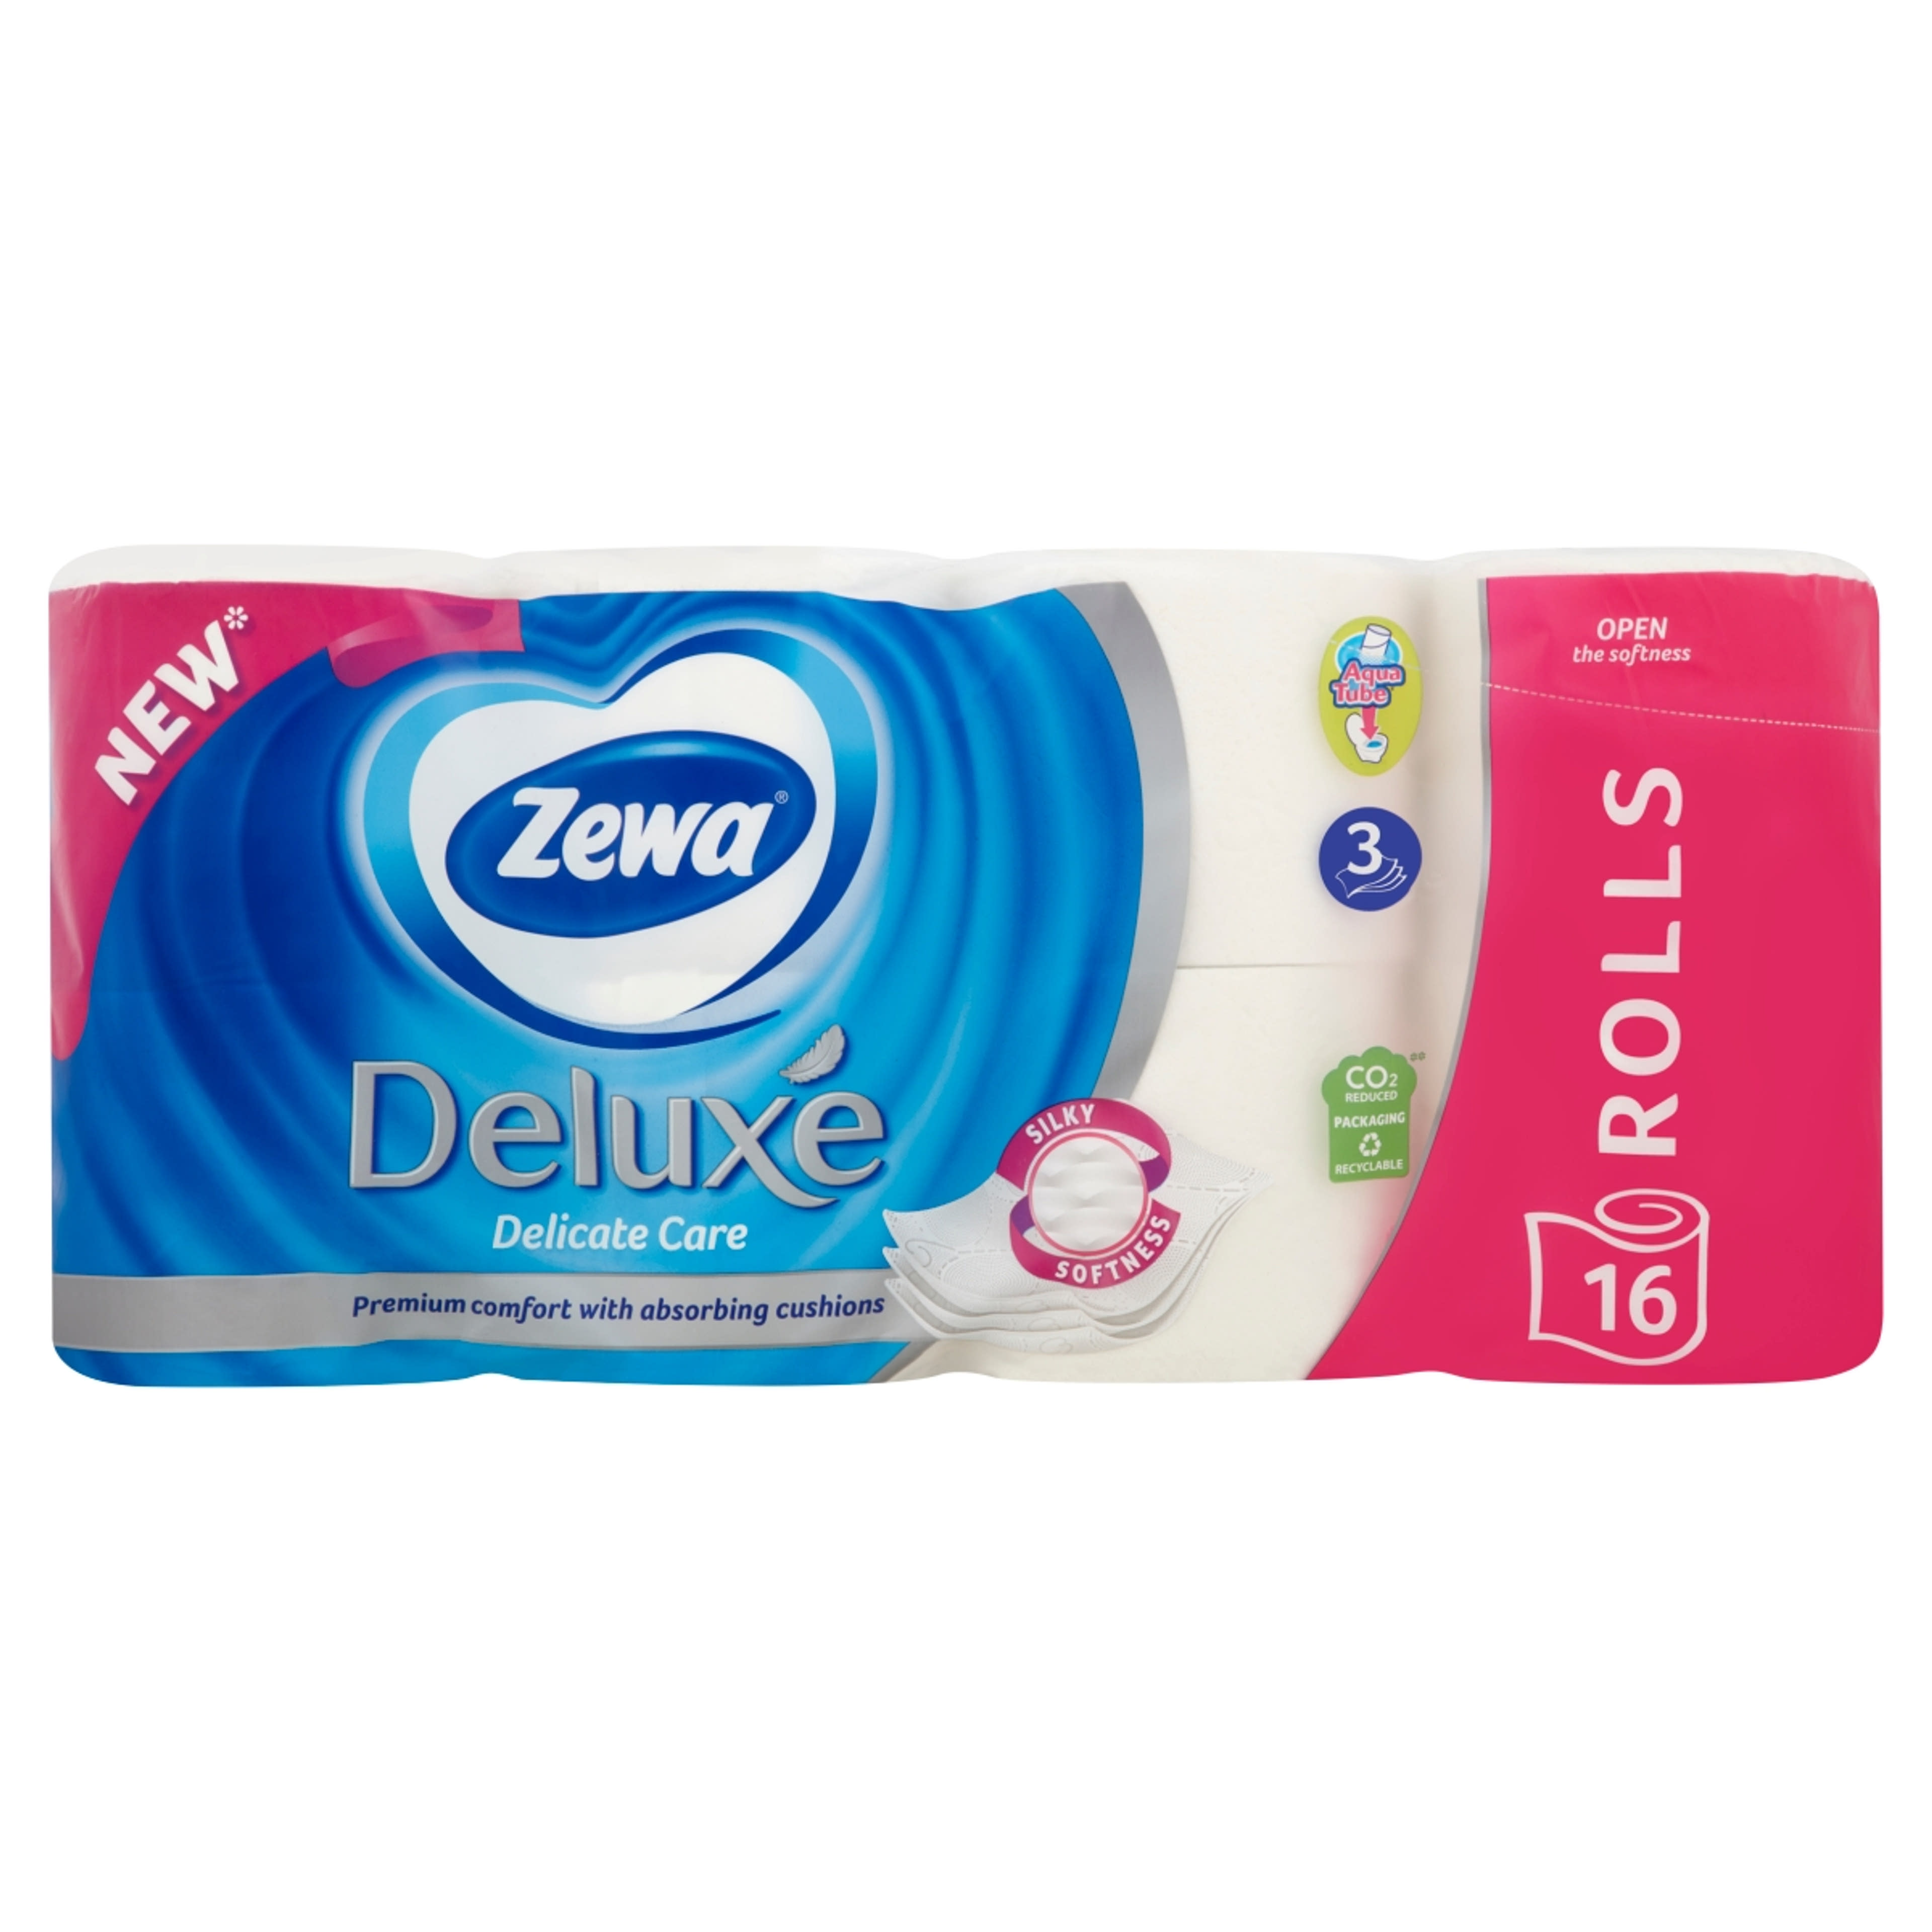 Zewa Deluxe Delicate Care 3 Rétegű Toalettpapír - 16 tekercs-1